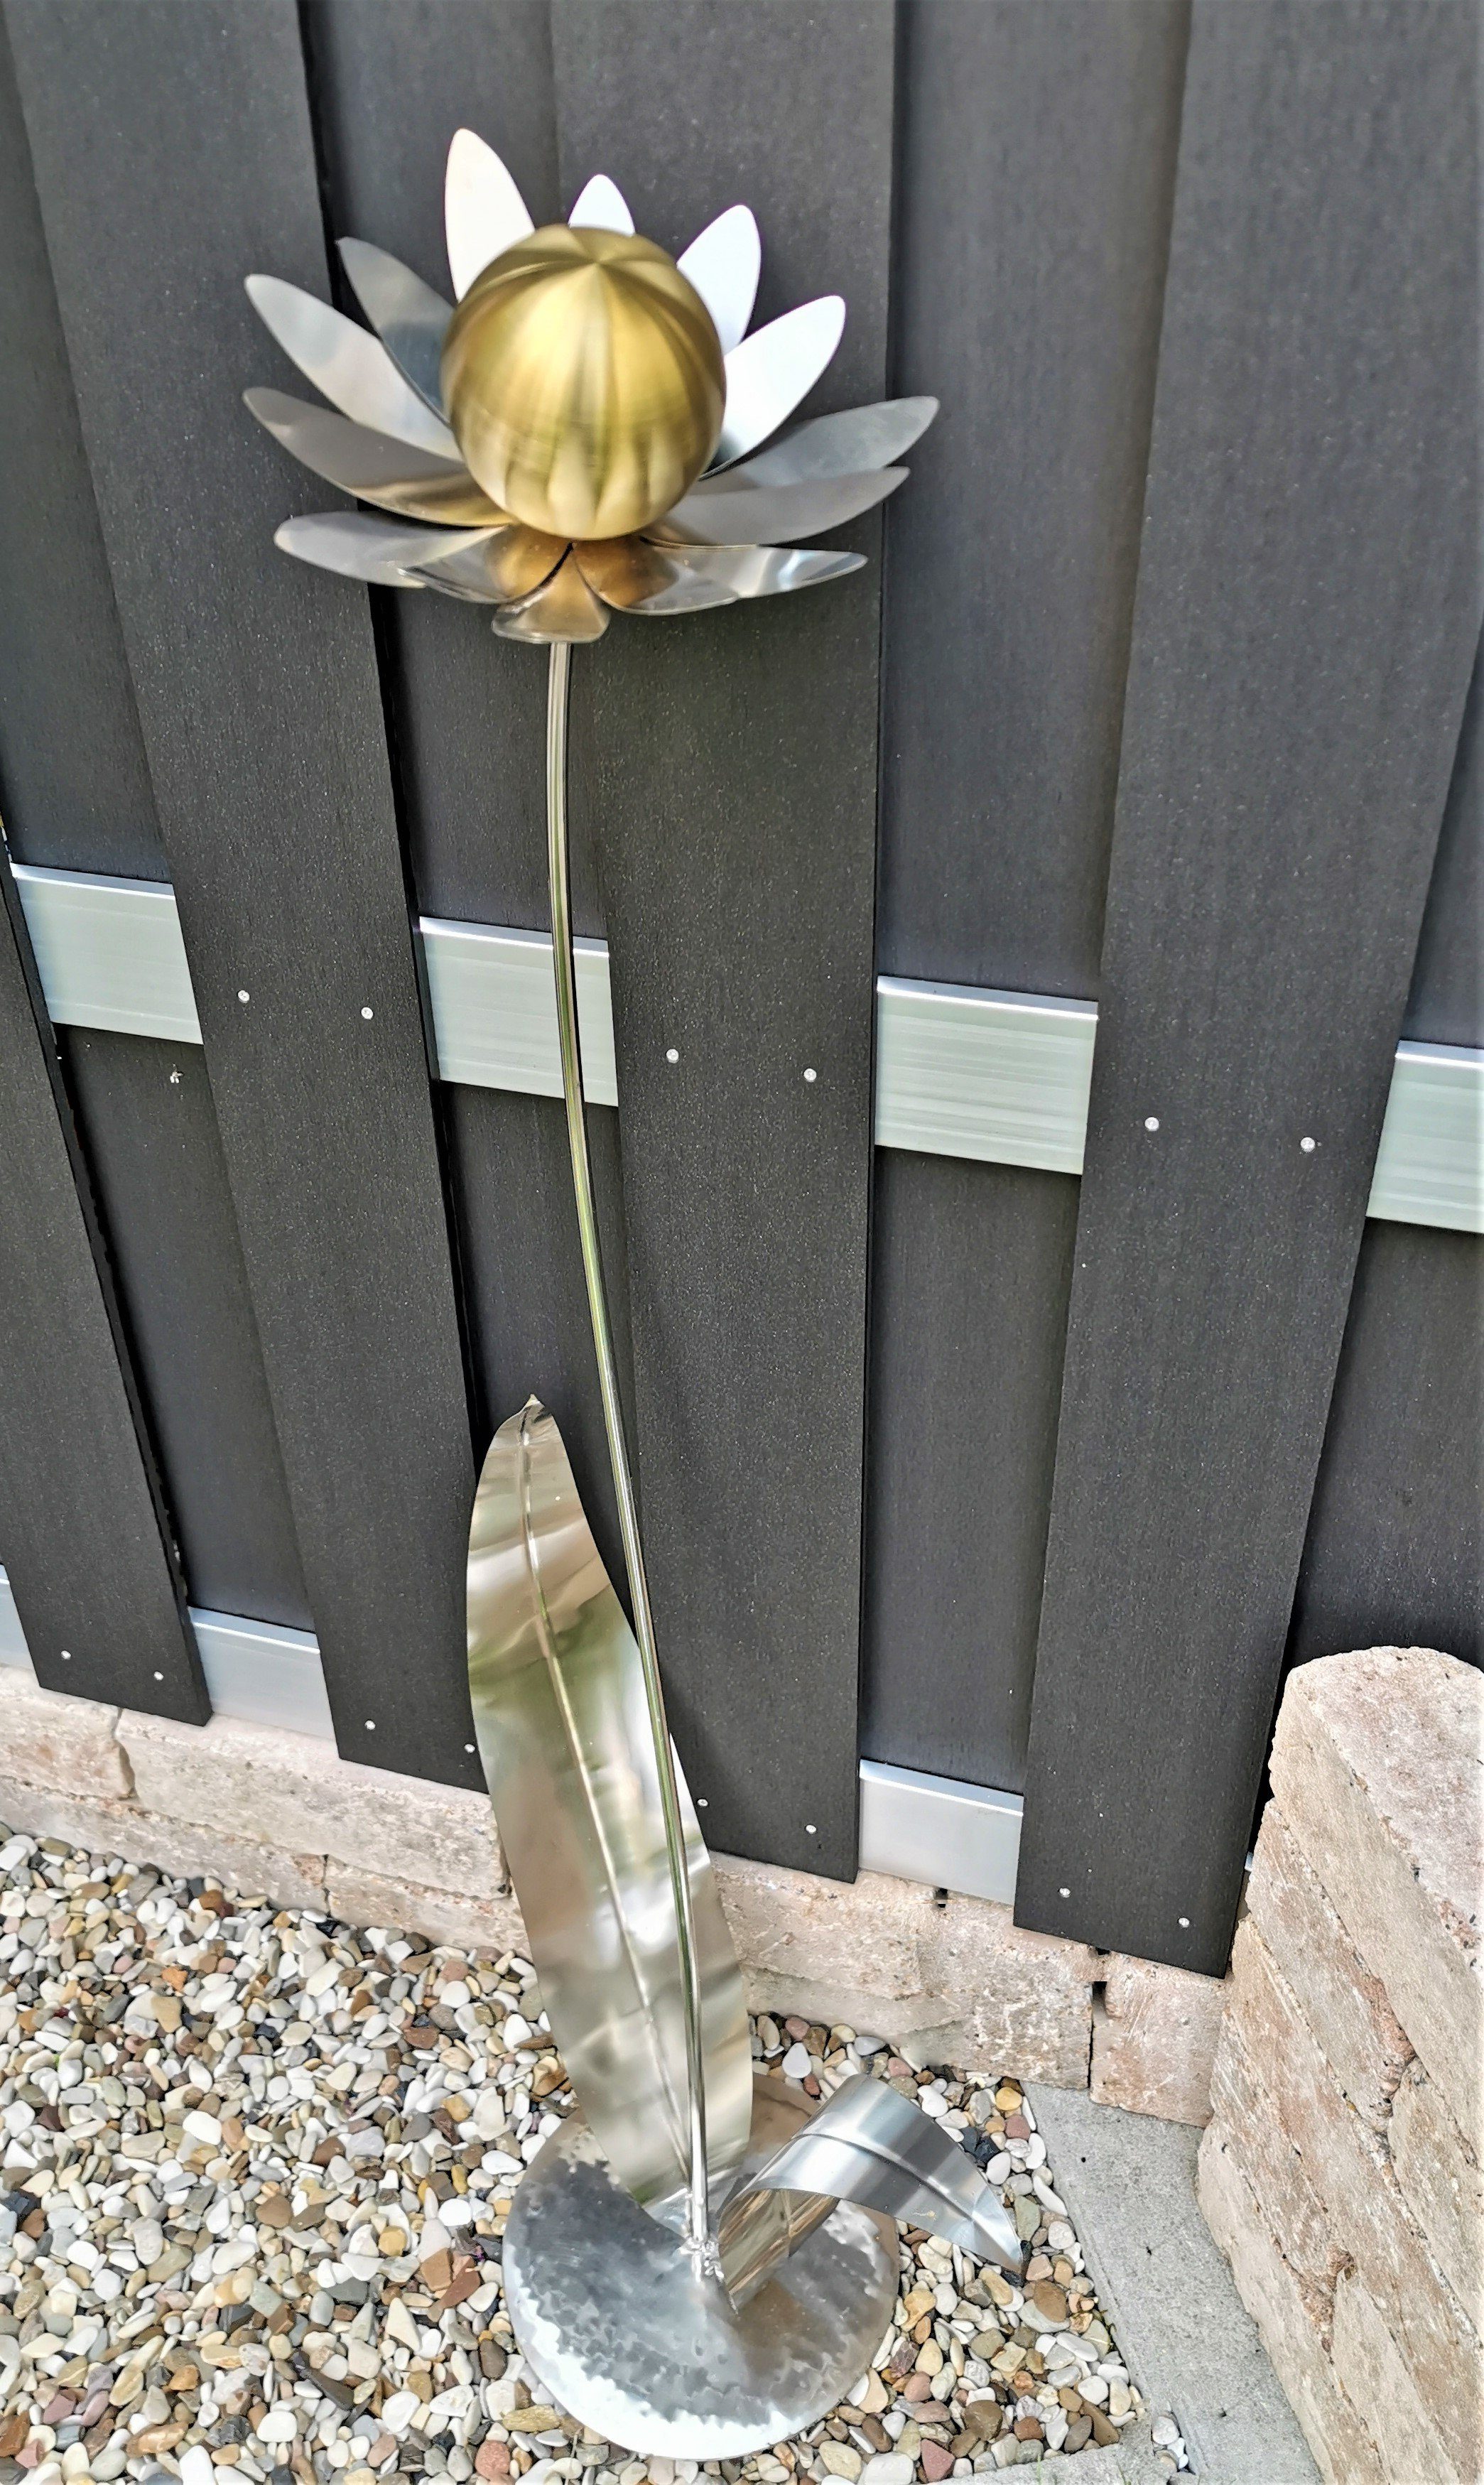 Jürgen Bocker Garten-Ambiente Gartenstecker Skulptur Blume Palermo Edelstahl Kugel gold matt gebürstet 120cm Deko Garten